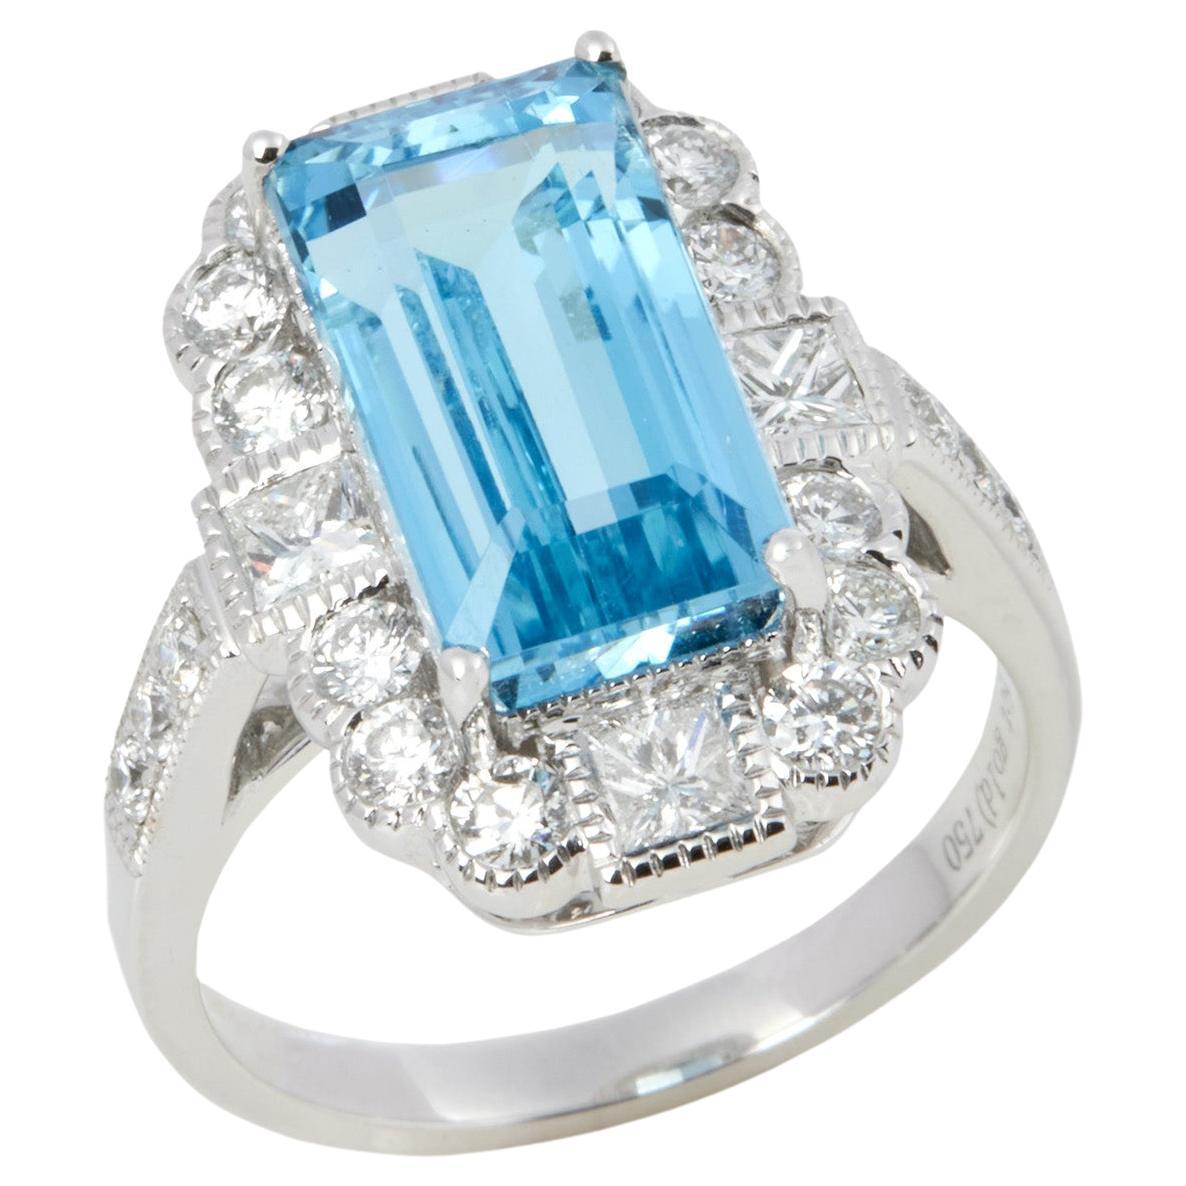 David Jerome Certified 5.67ct Emerald Cut Aquamarine and Diamond Ring For Sale